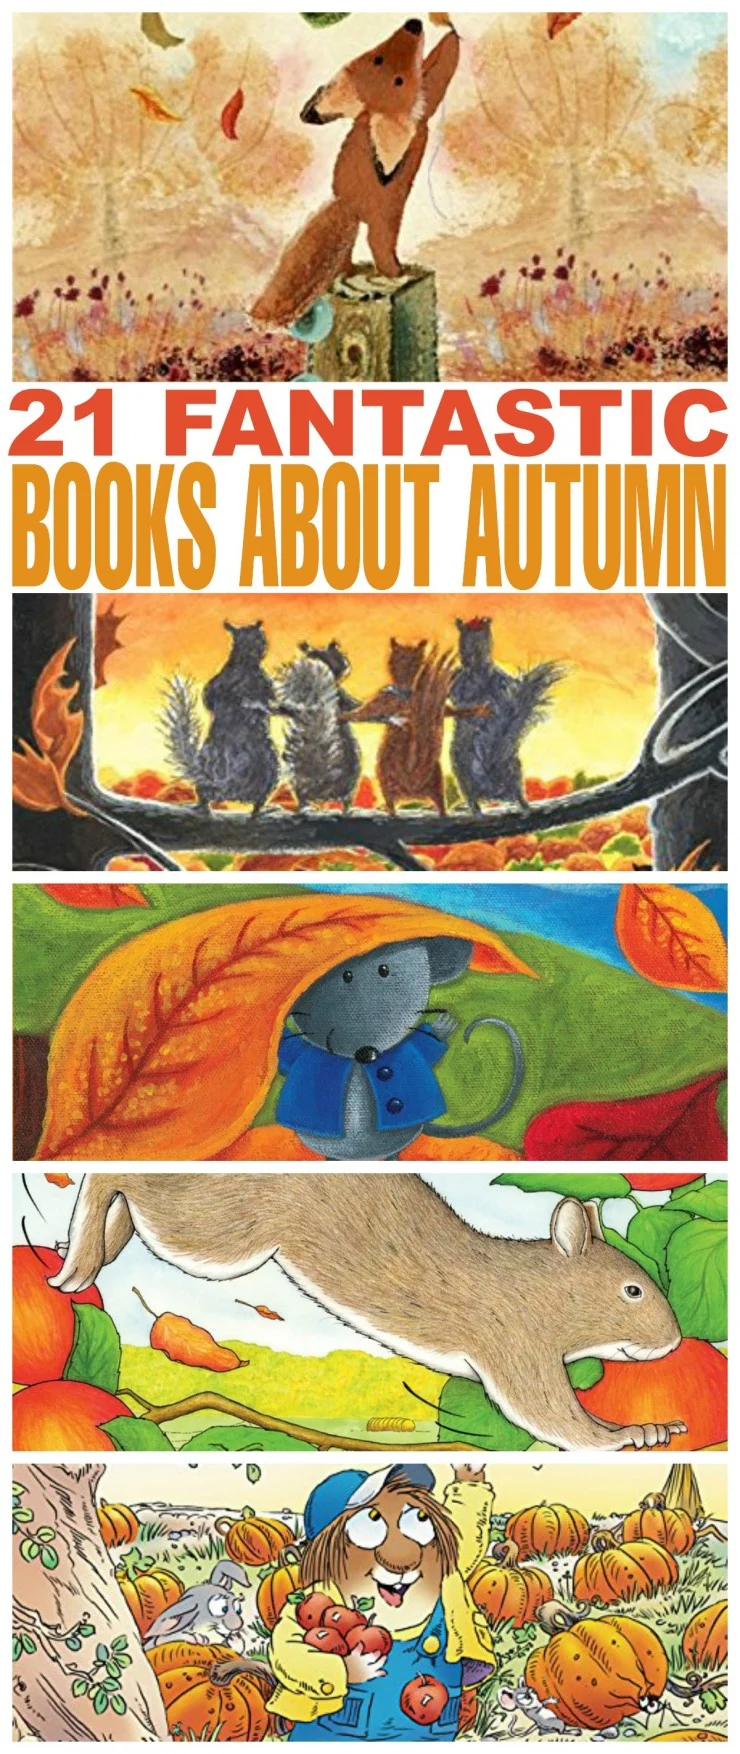 21 Fantastic Books About Autumn